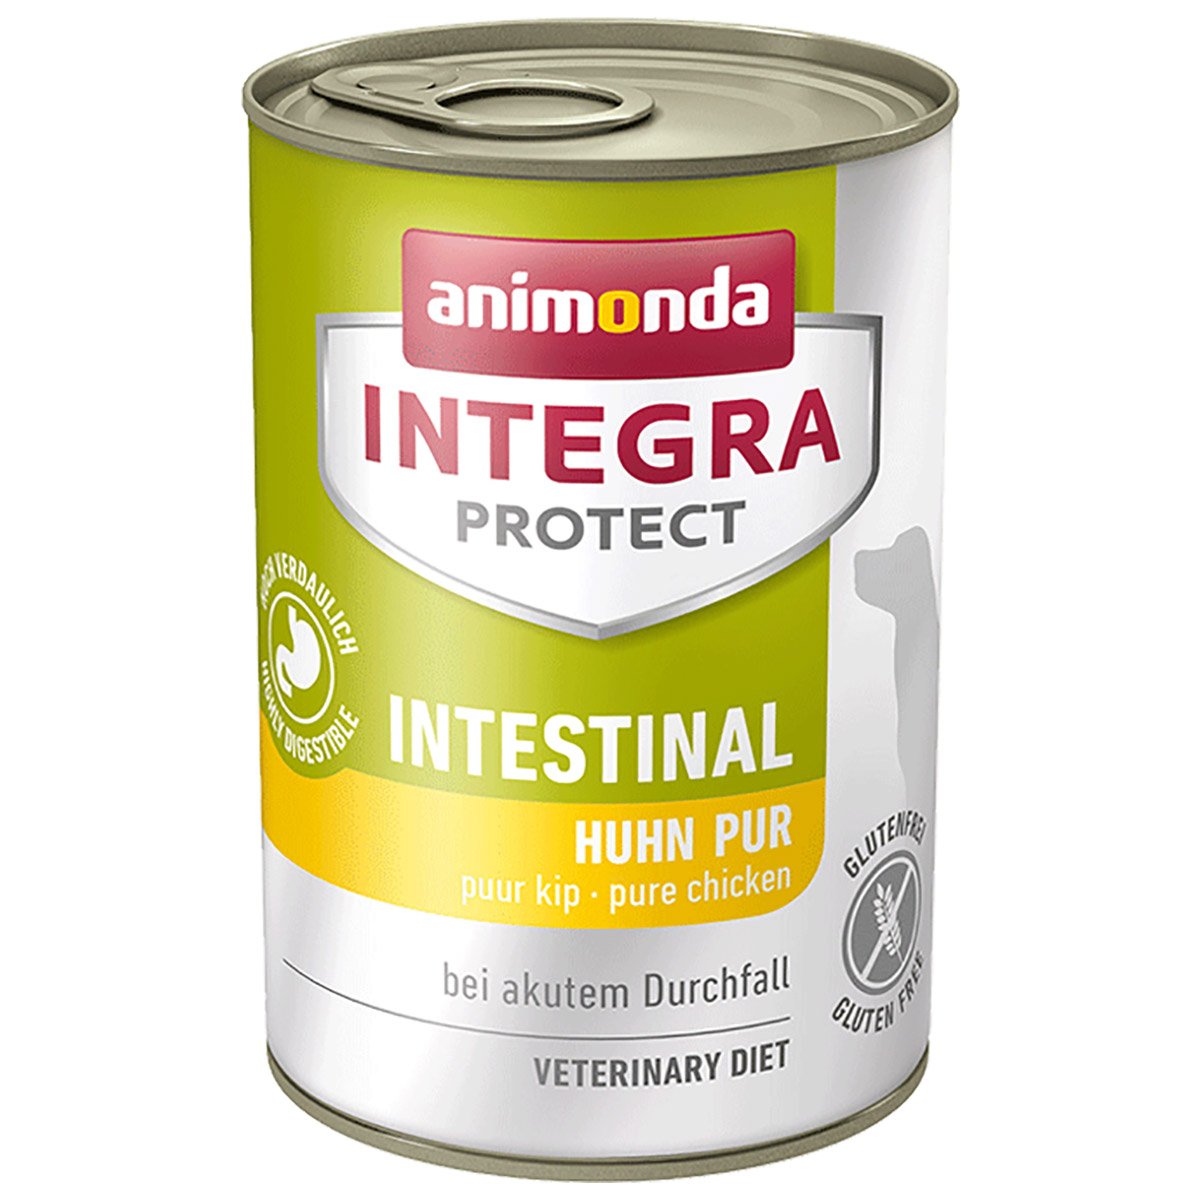 animonda Integra Protect Adult akuter Durchfall 12x400g von animonda Integra Protect